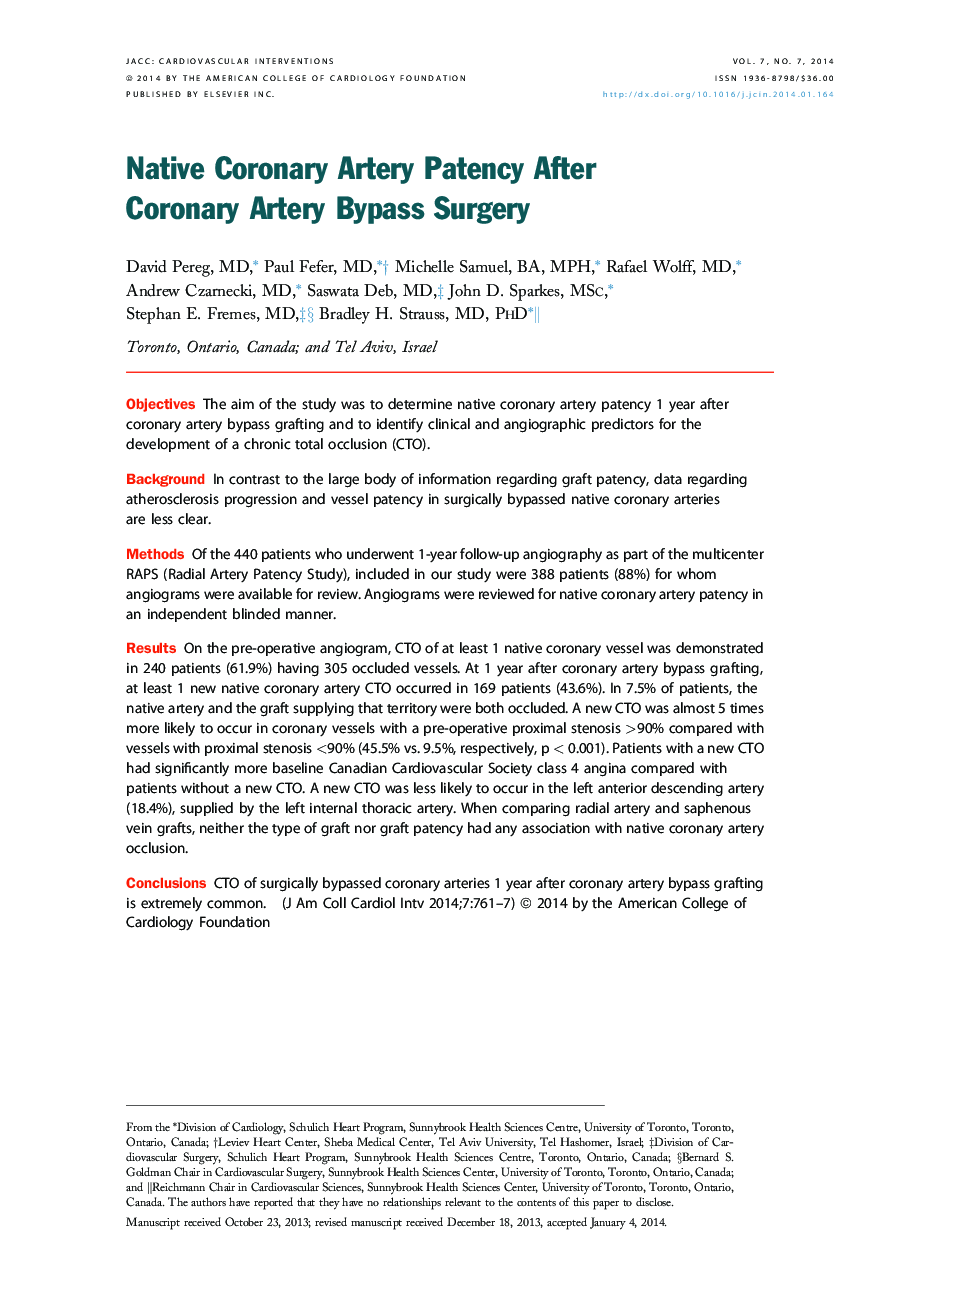 Native Coronary Artery Patency After Coronary Artery Bypass Surgery 